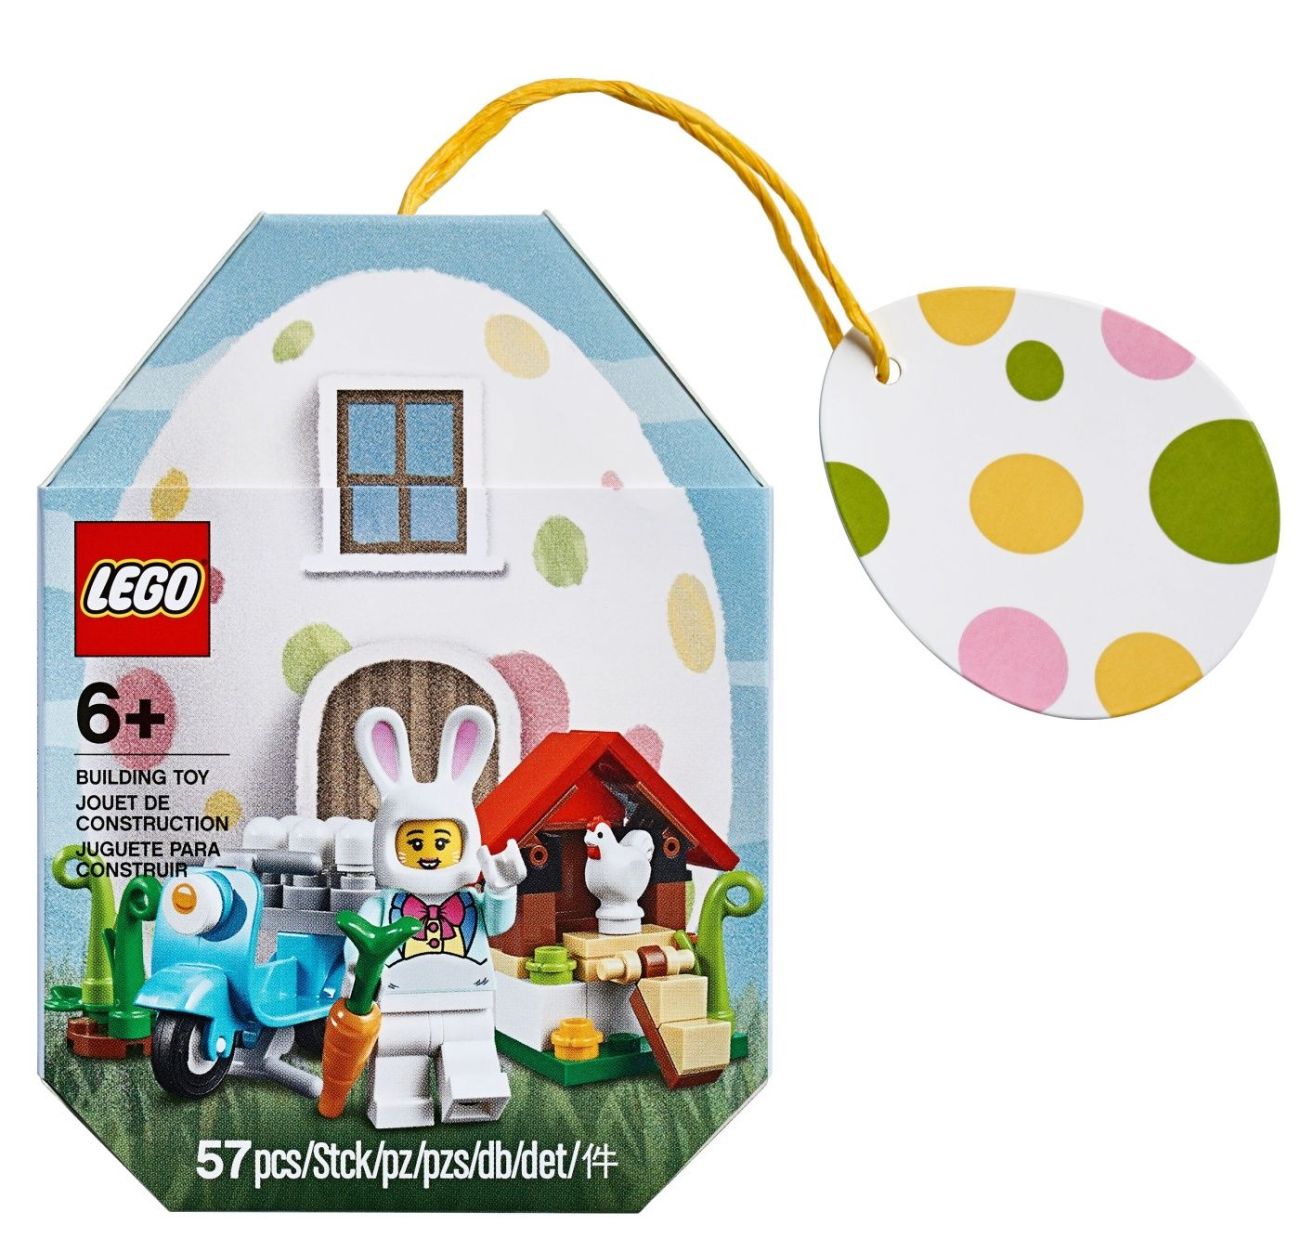 Verpackung der LEGO Oster-Zugabe 2020 (Foto: LEGO)